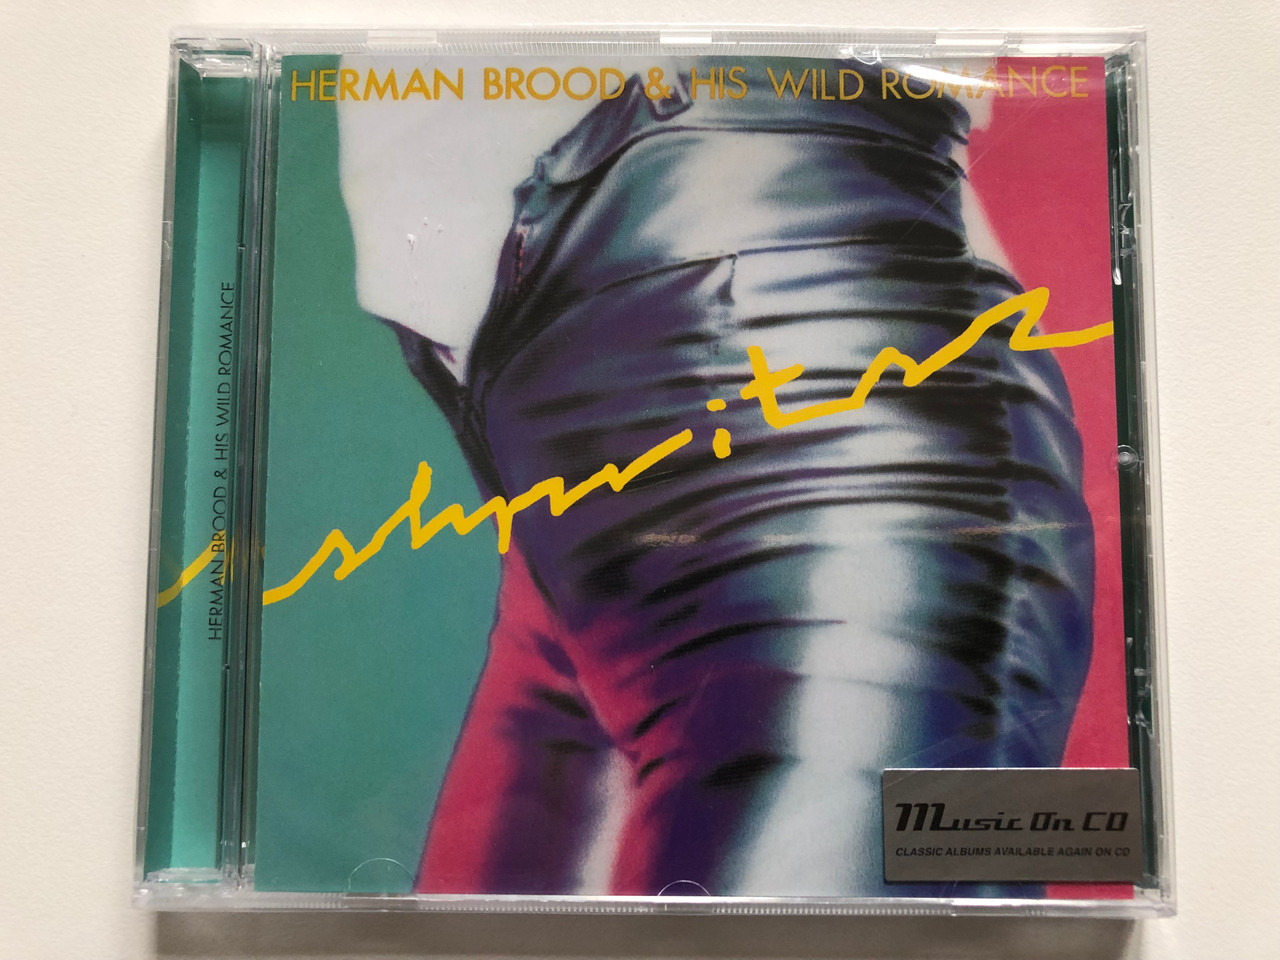 Herman Brood & His Wild Romance Discography